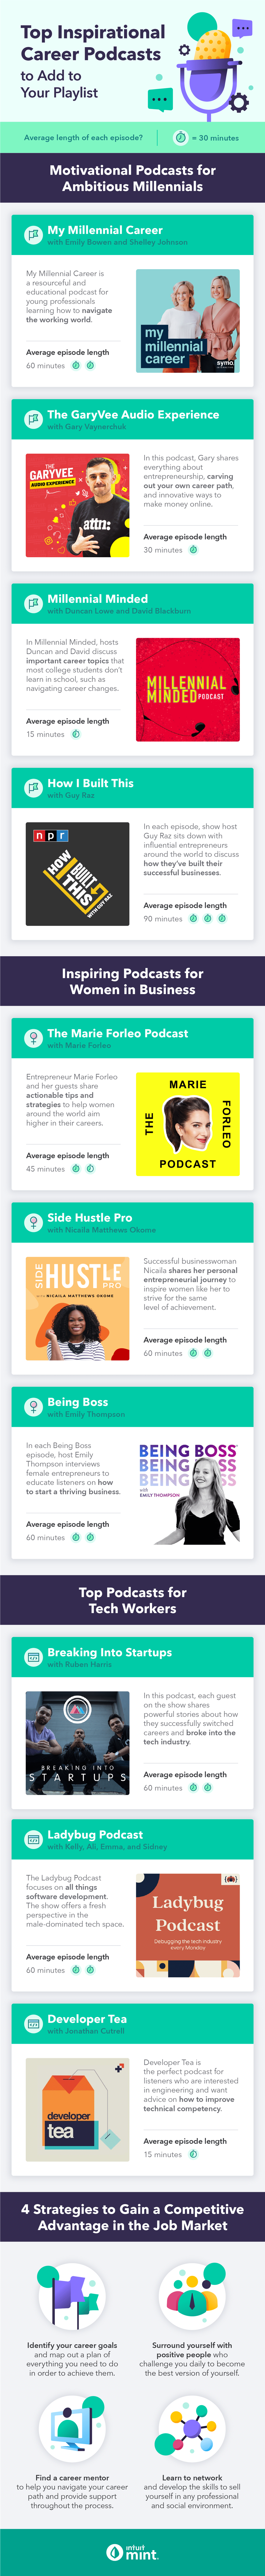 top inspirational career podcasts 